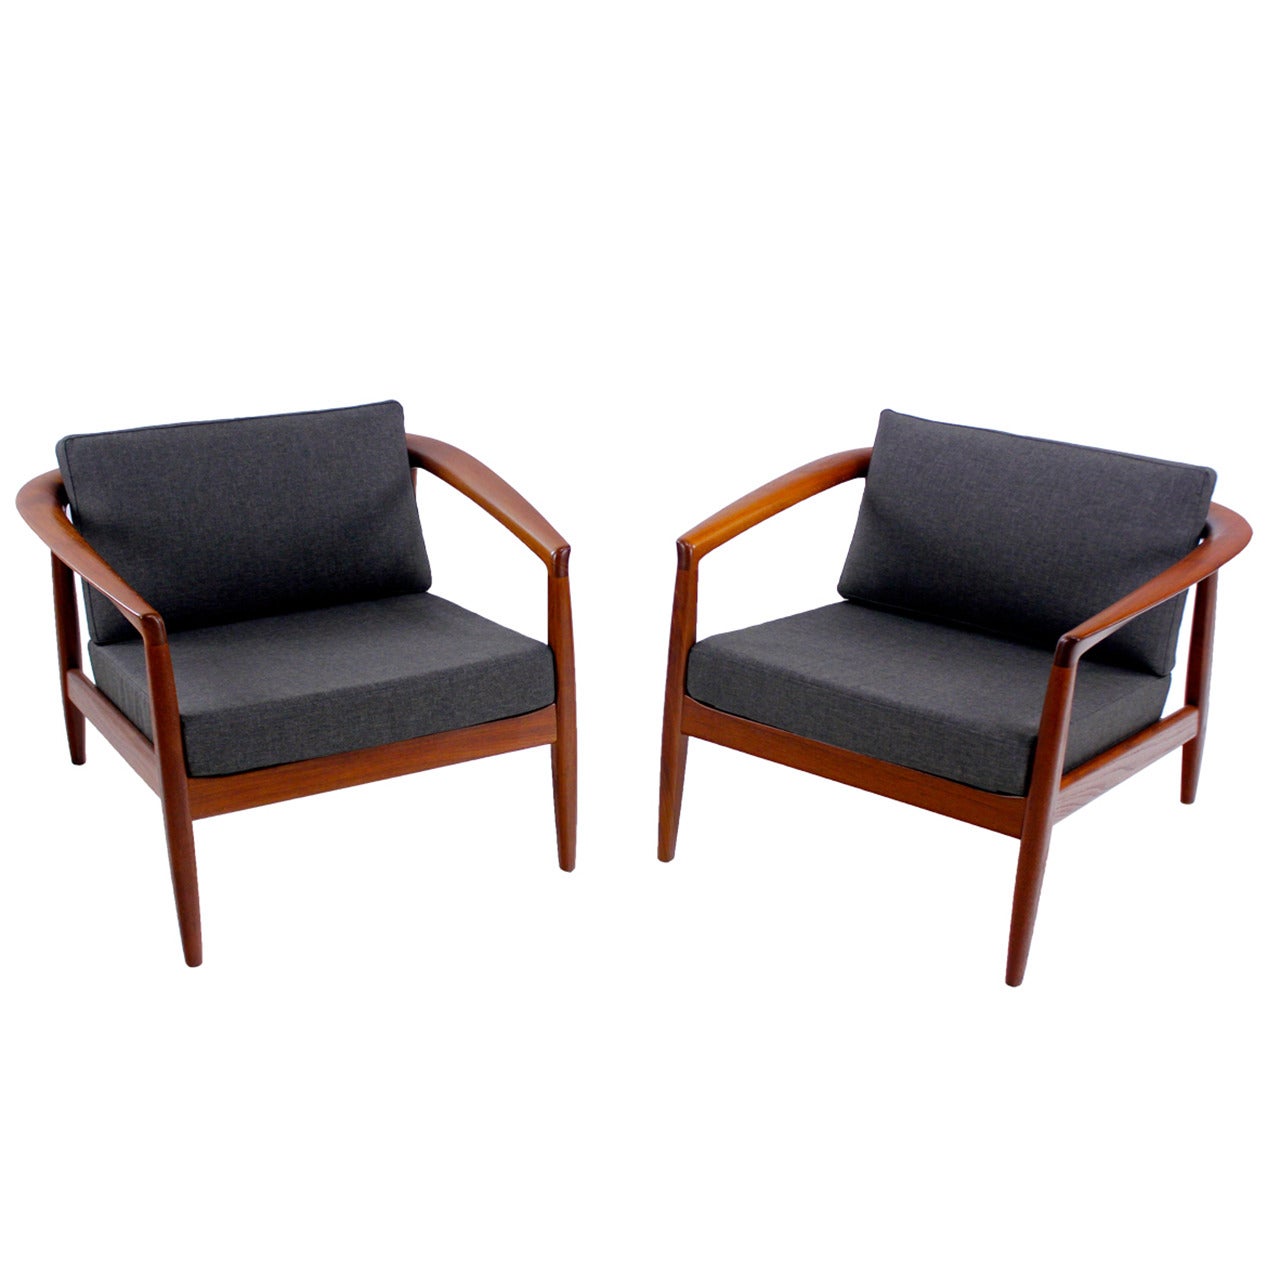 Pair of Danish Modern Teak Armchairs Designed by Folke Ohlsson for DUX For Sale